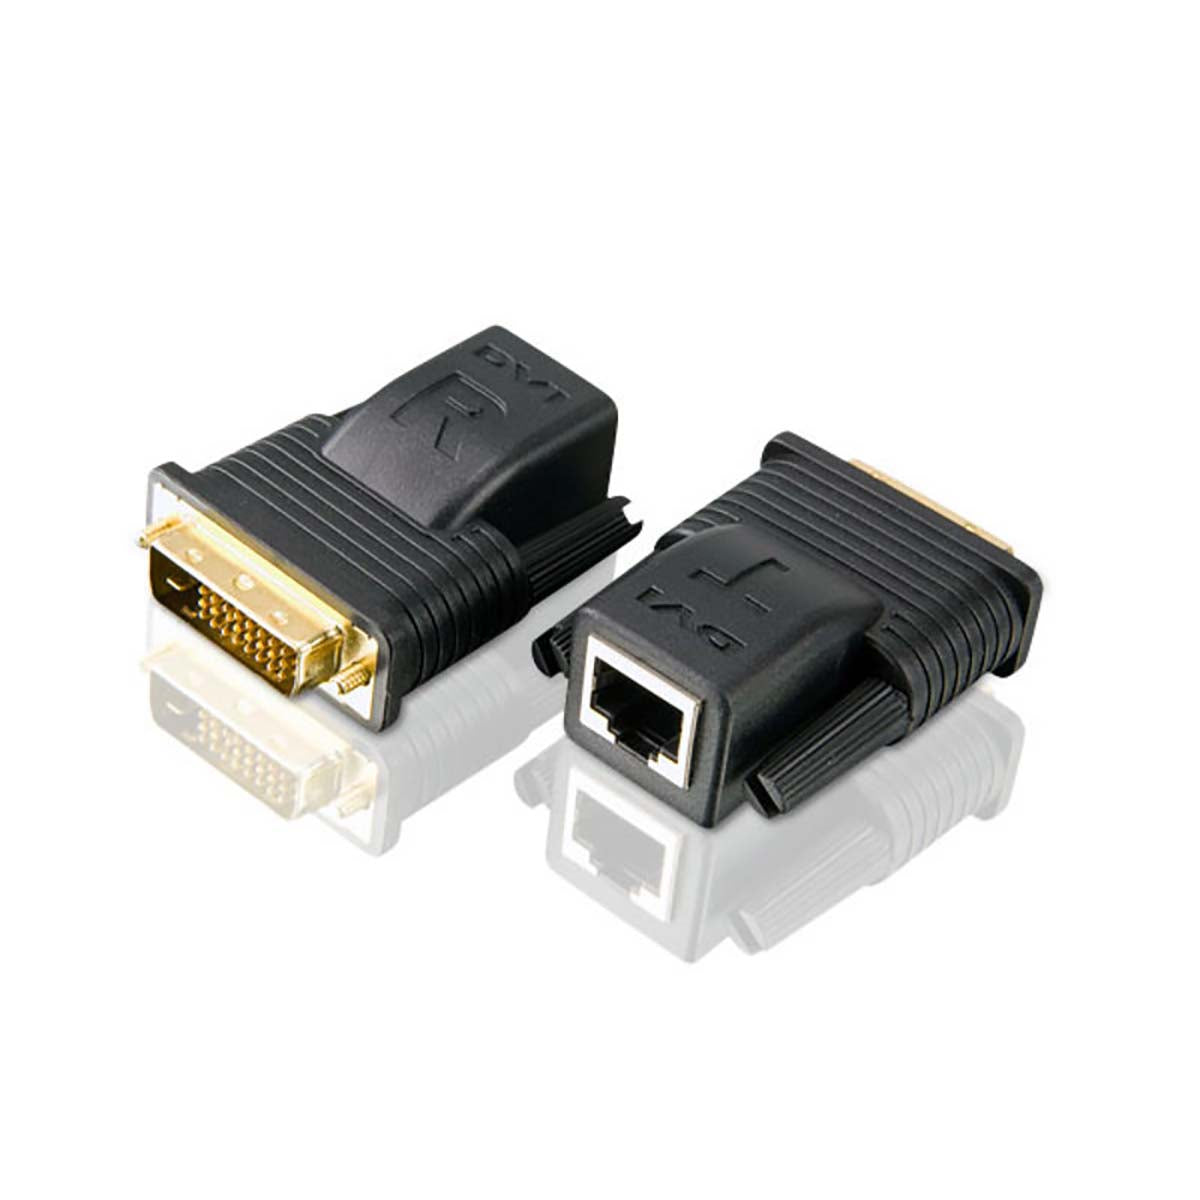 Mini-Cat-5-DVI-Extender (1080p bei 15m/1080i bei 20m)